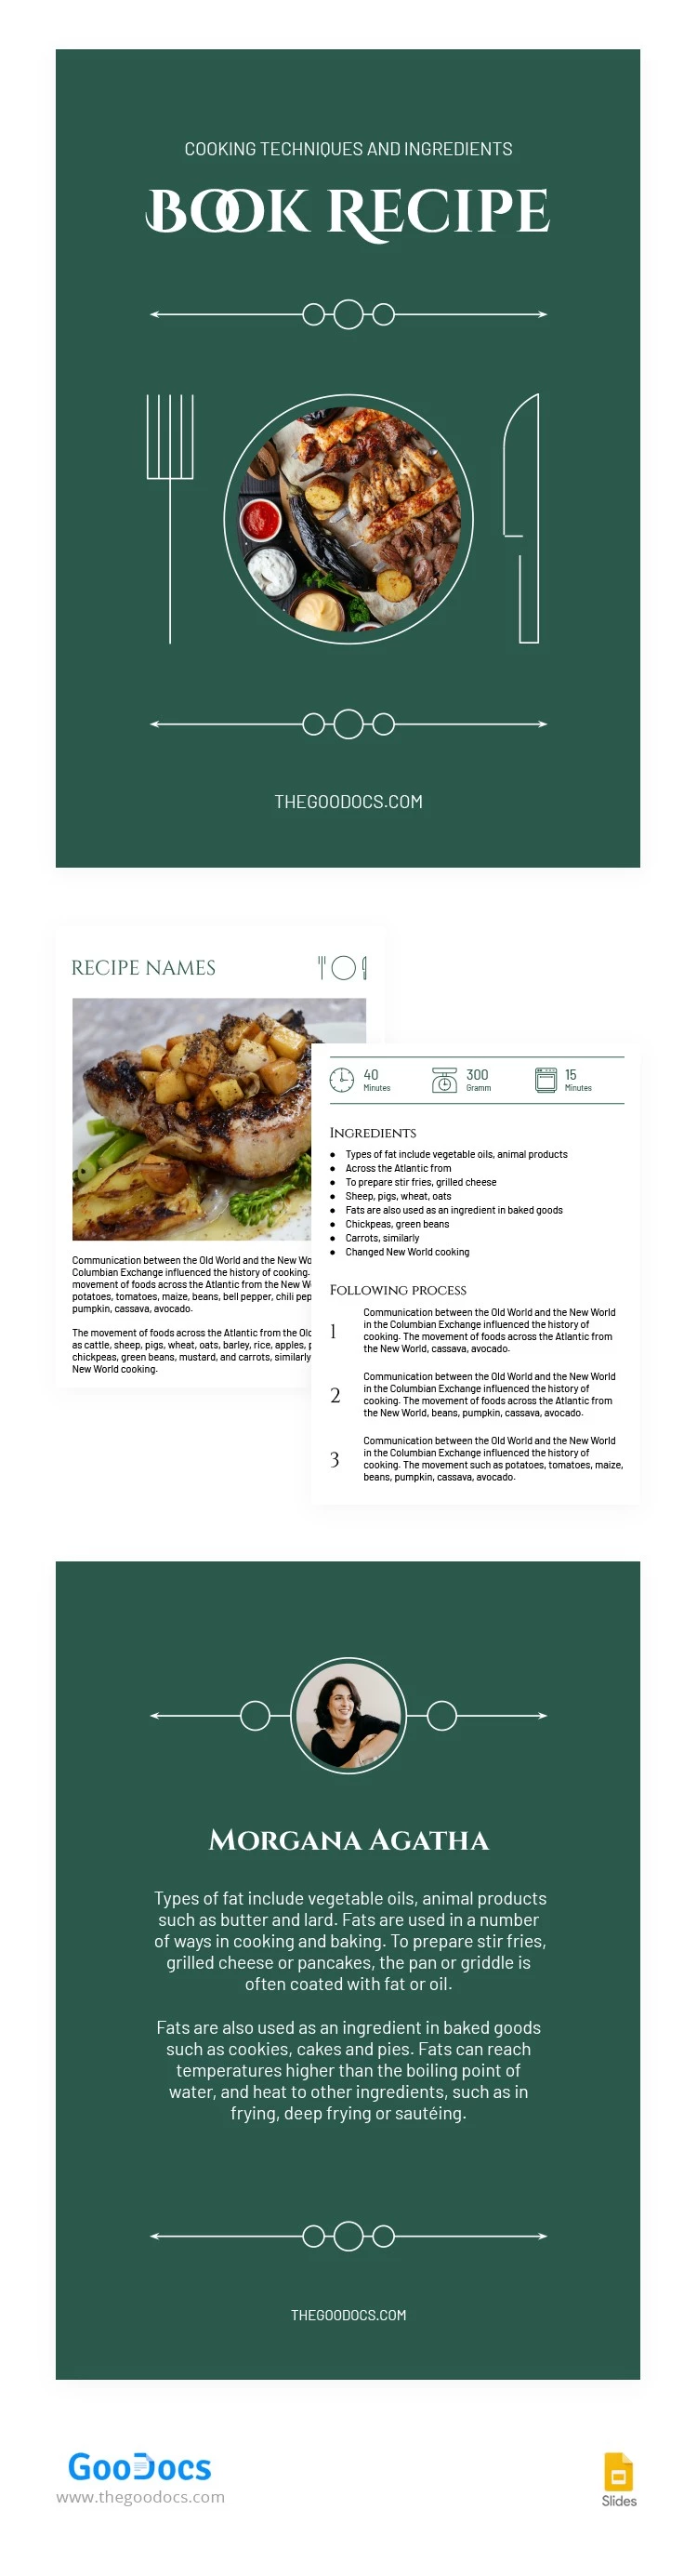 Libro di Ricette Elegante Verde - free Google Docs Template - 10065091